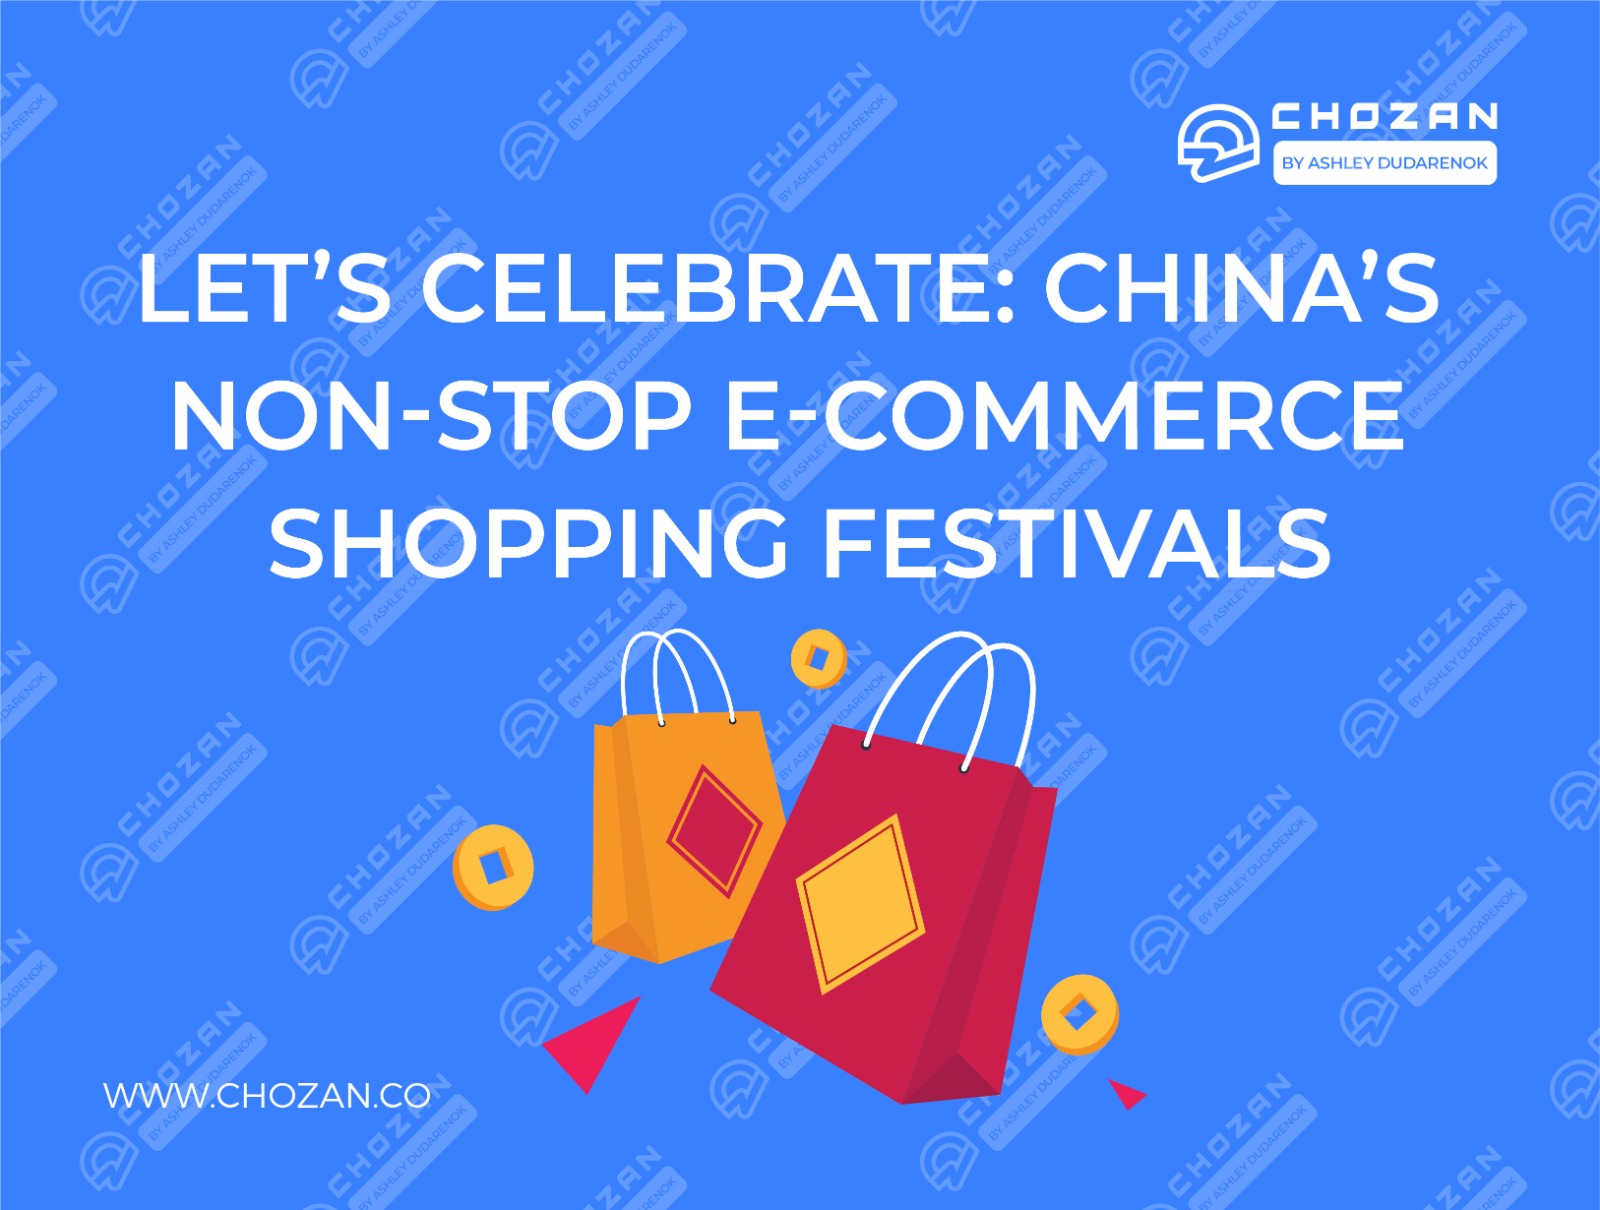 Let’s Celebrate: China’s Non-stop E-commerce Shopping Festivals